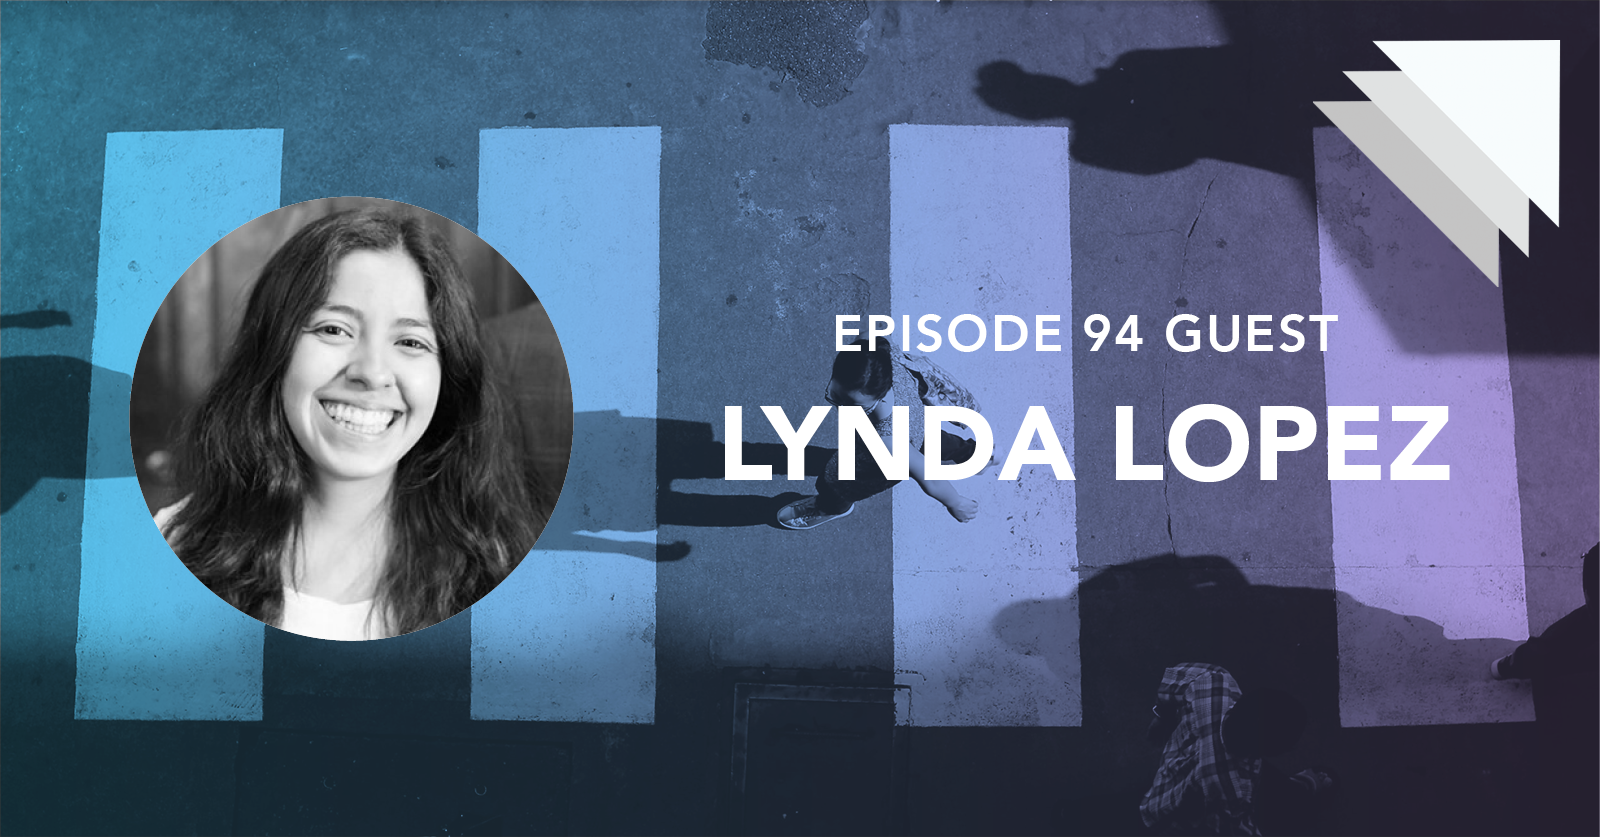 Episode 94 Guest Lynda Lopez